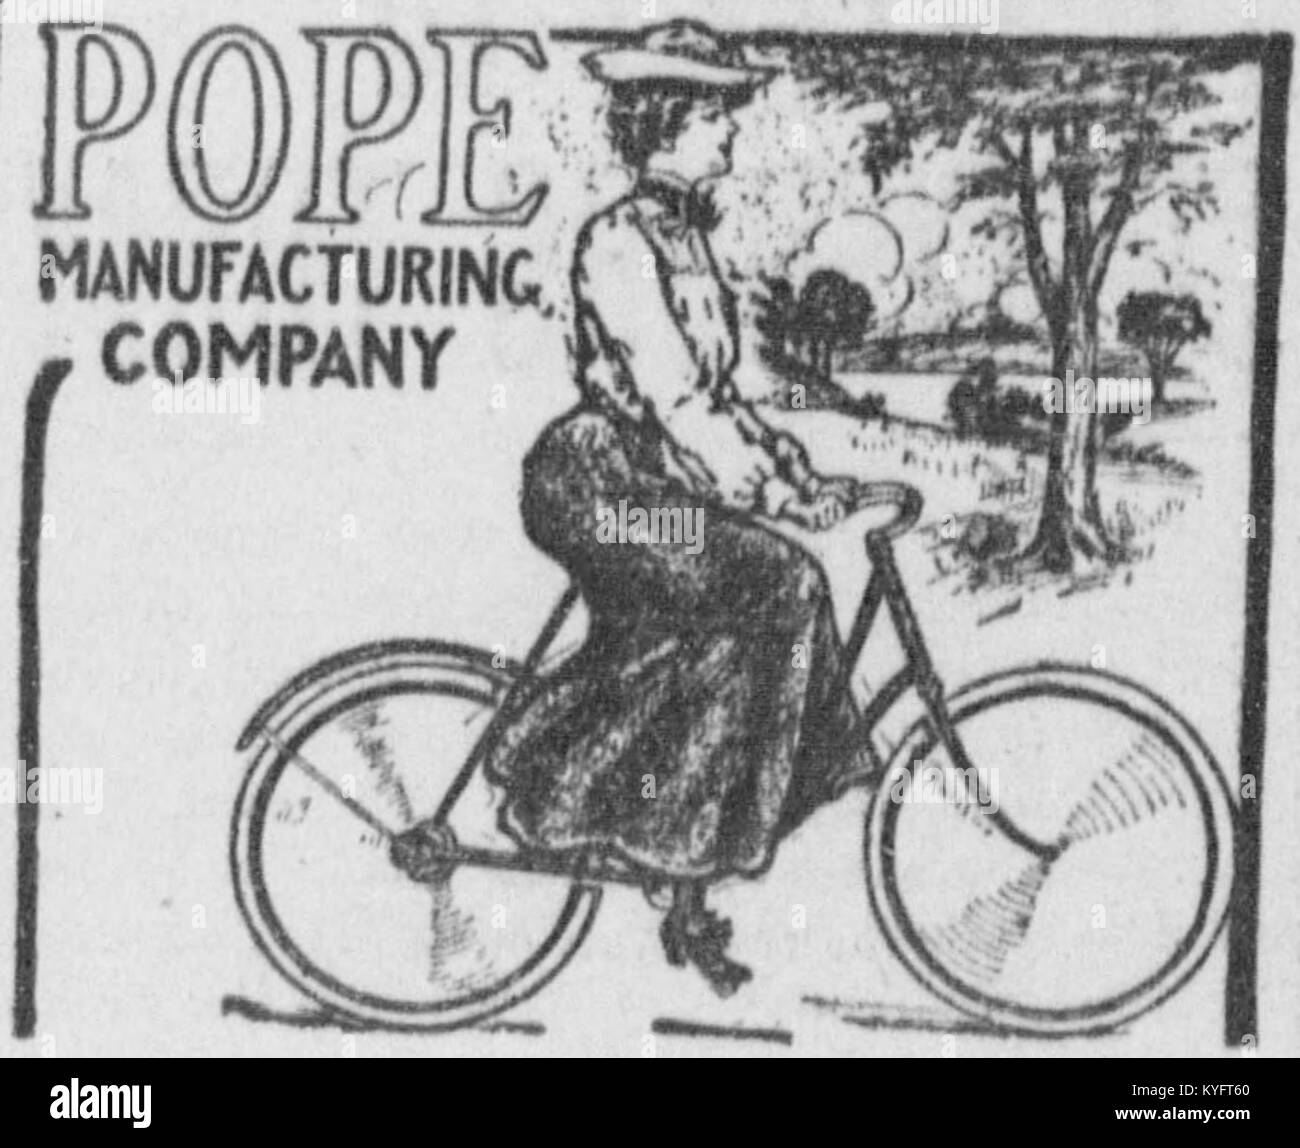 Women's bicycle advertisement (1904) Stock Photo